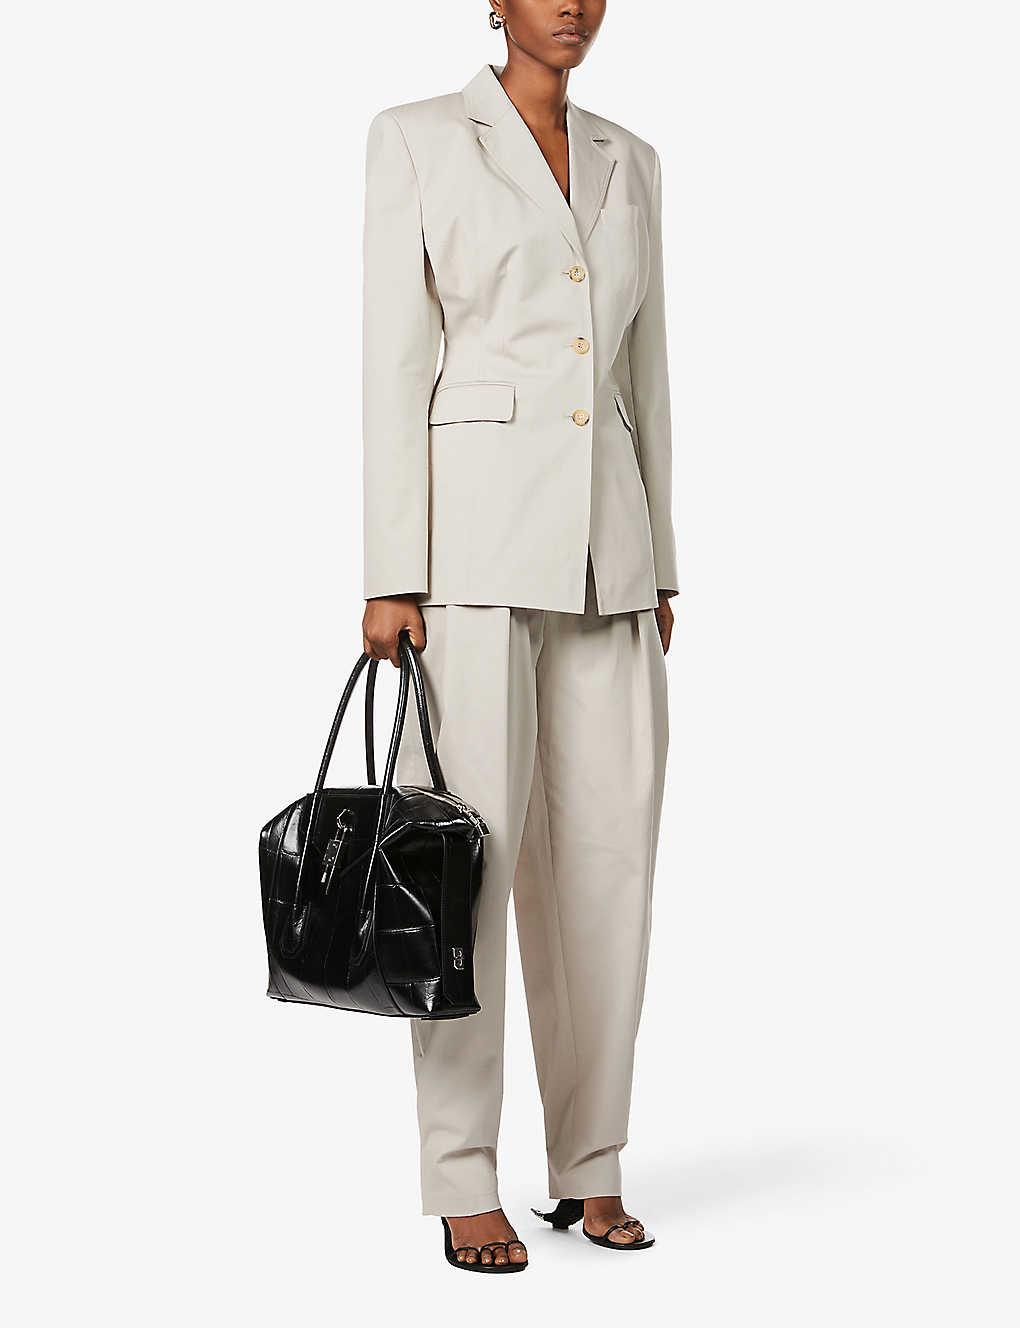 Givenchy Black Antigona Soft Lock Medium Leather Shoulder Bag - Lyst